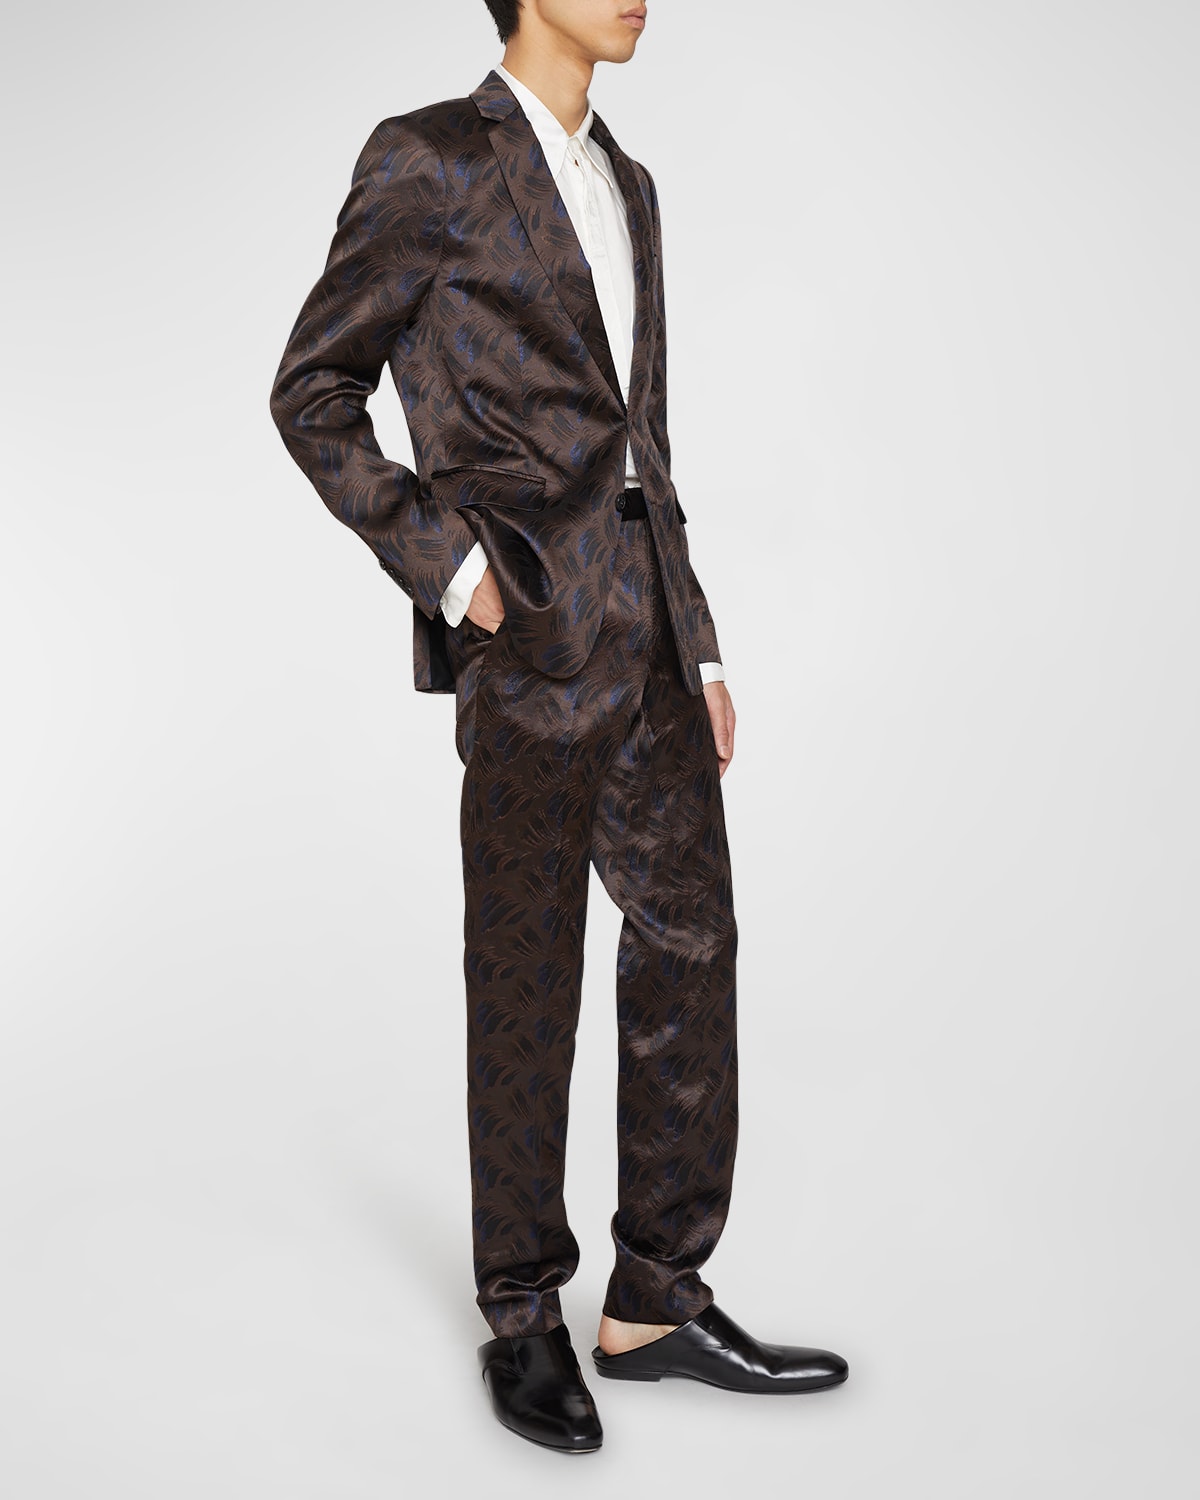 Dries Van Noten Men's Kayne Tie Jacquard Suit In Brown